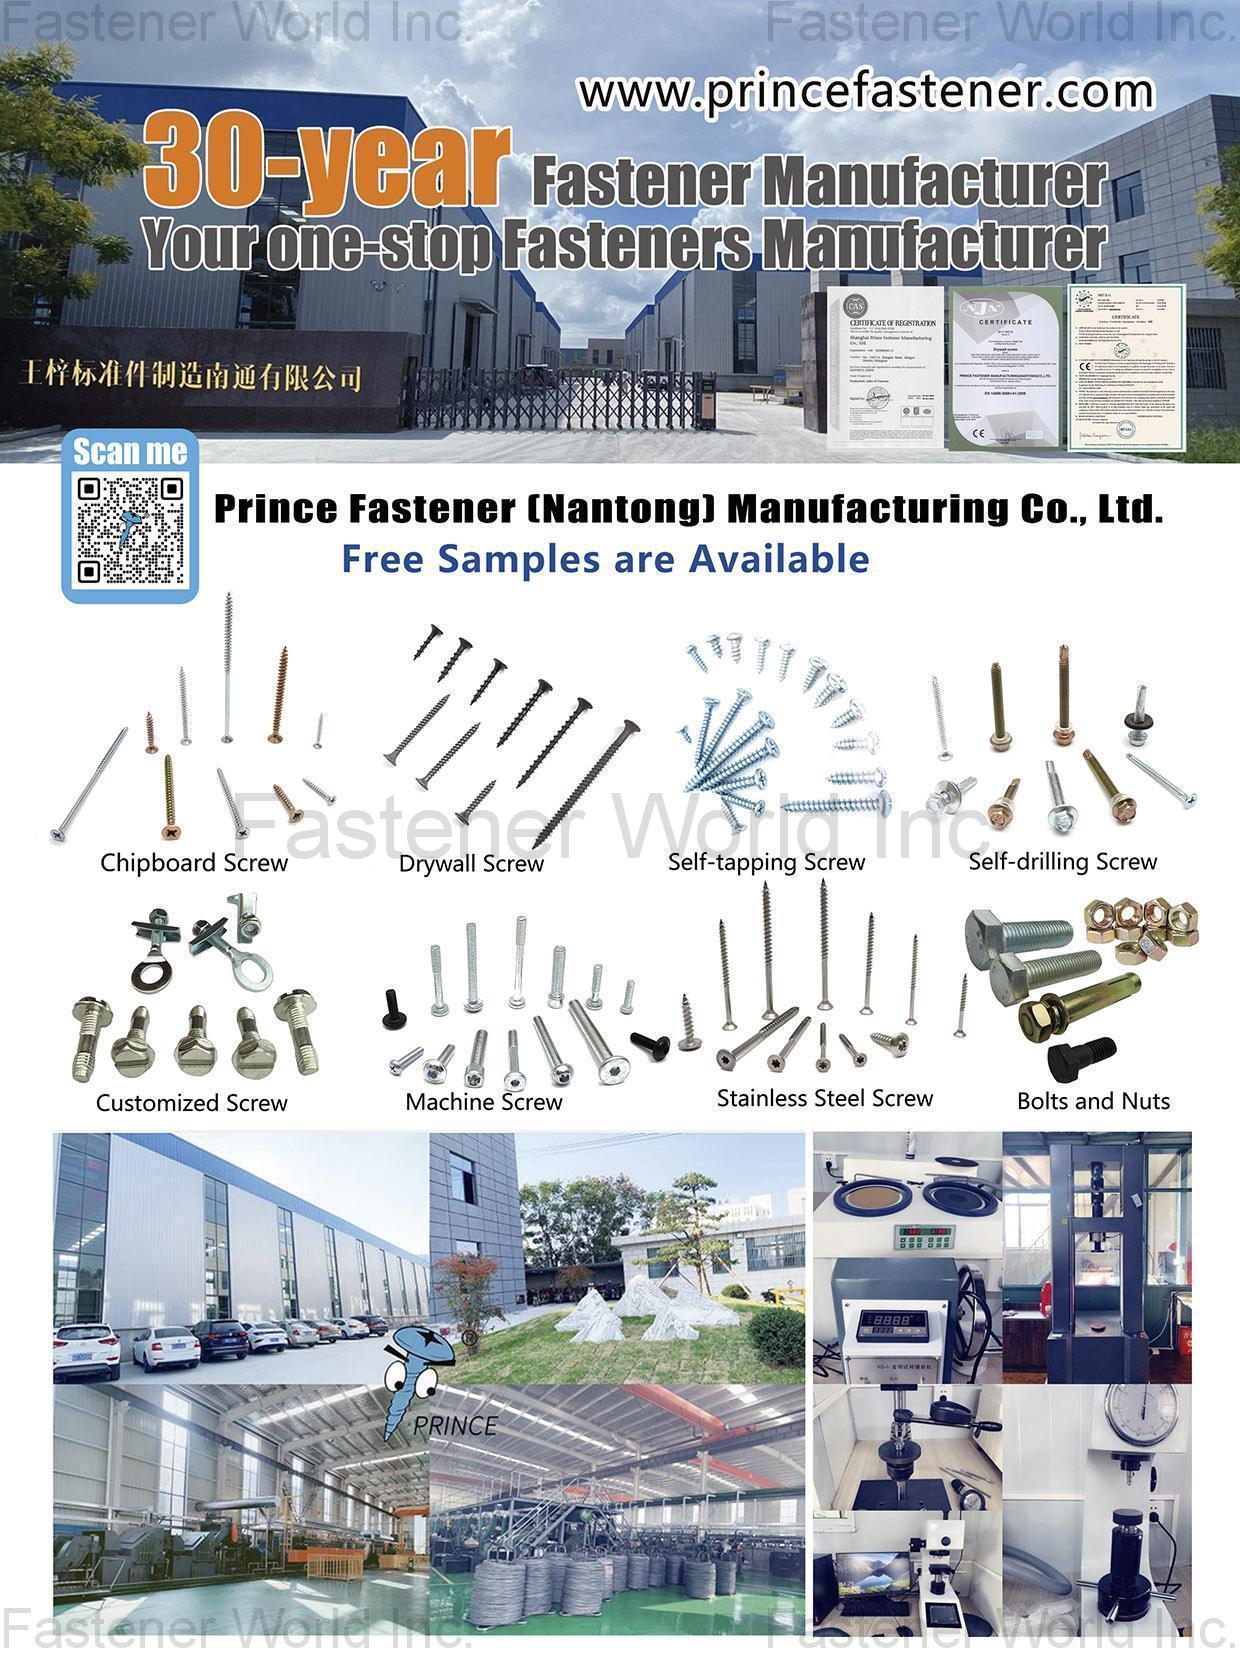 PRINCE FASTENER (NANTONG) MANUFACTURING CO., LTD. , Chipboard Screws, Drywall Screws, Self-tapping Screws, Self-drilling Screws, Customized Screws, Machine Screws, Stainless Steel Screws, Bolts, Nuts